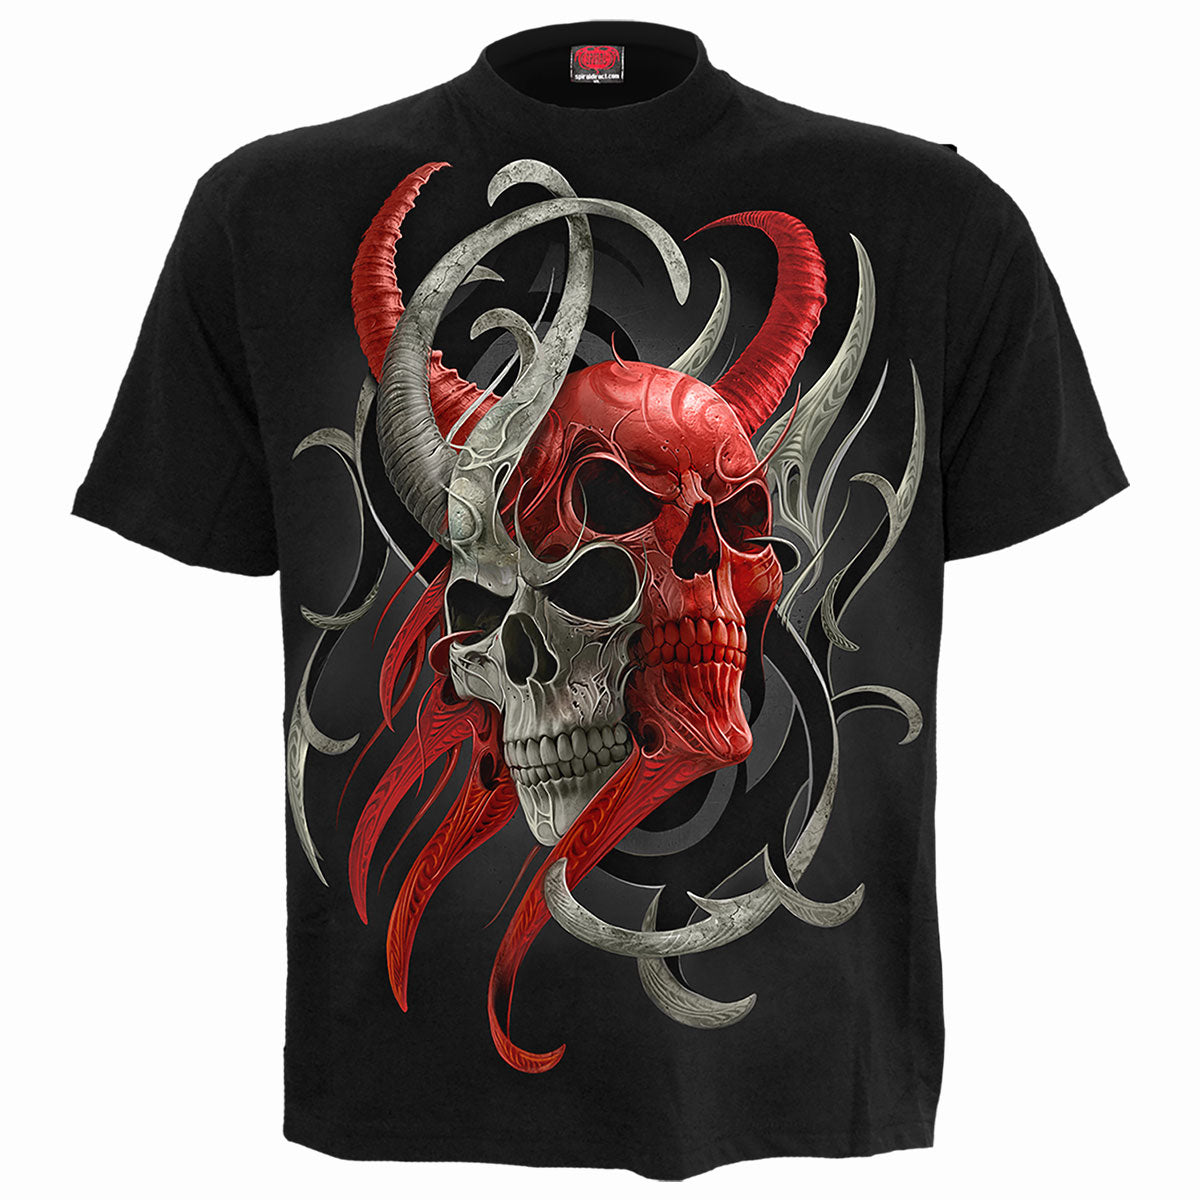 SKULL SYNTHESIS - T-Shirt Black